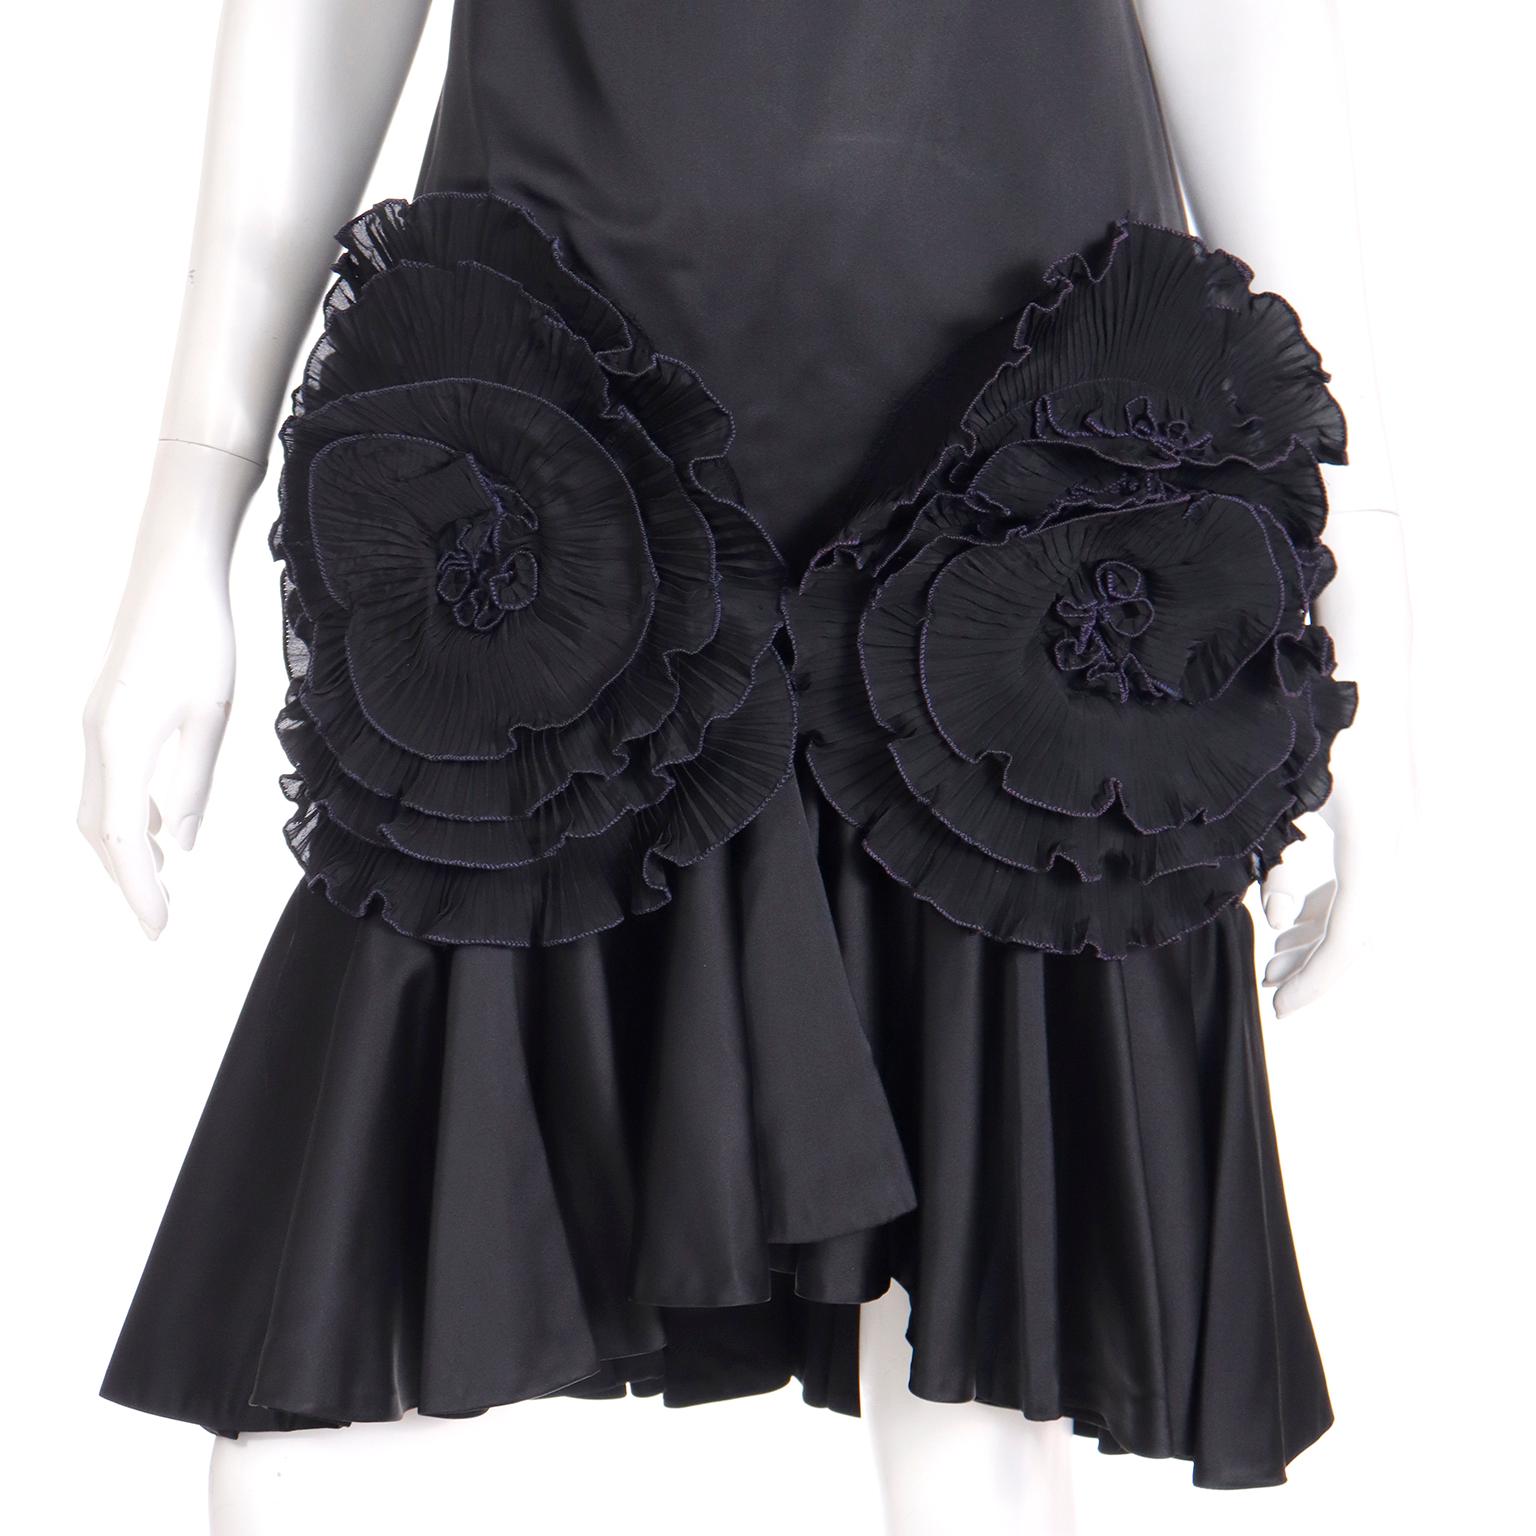 Zandra Rhodes London Vintage Black Dress W Rosettes Beads & Sequins For Sale 4